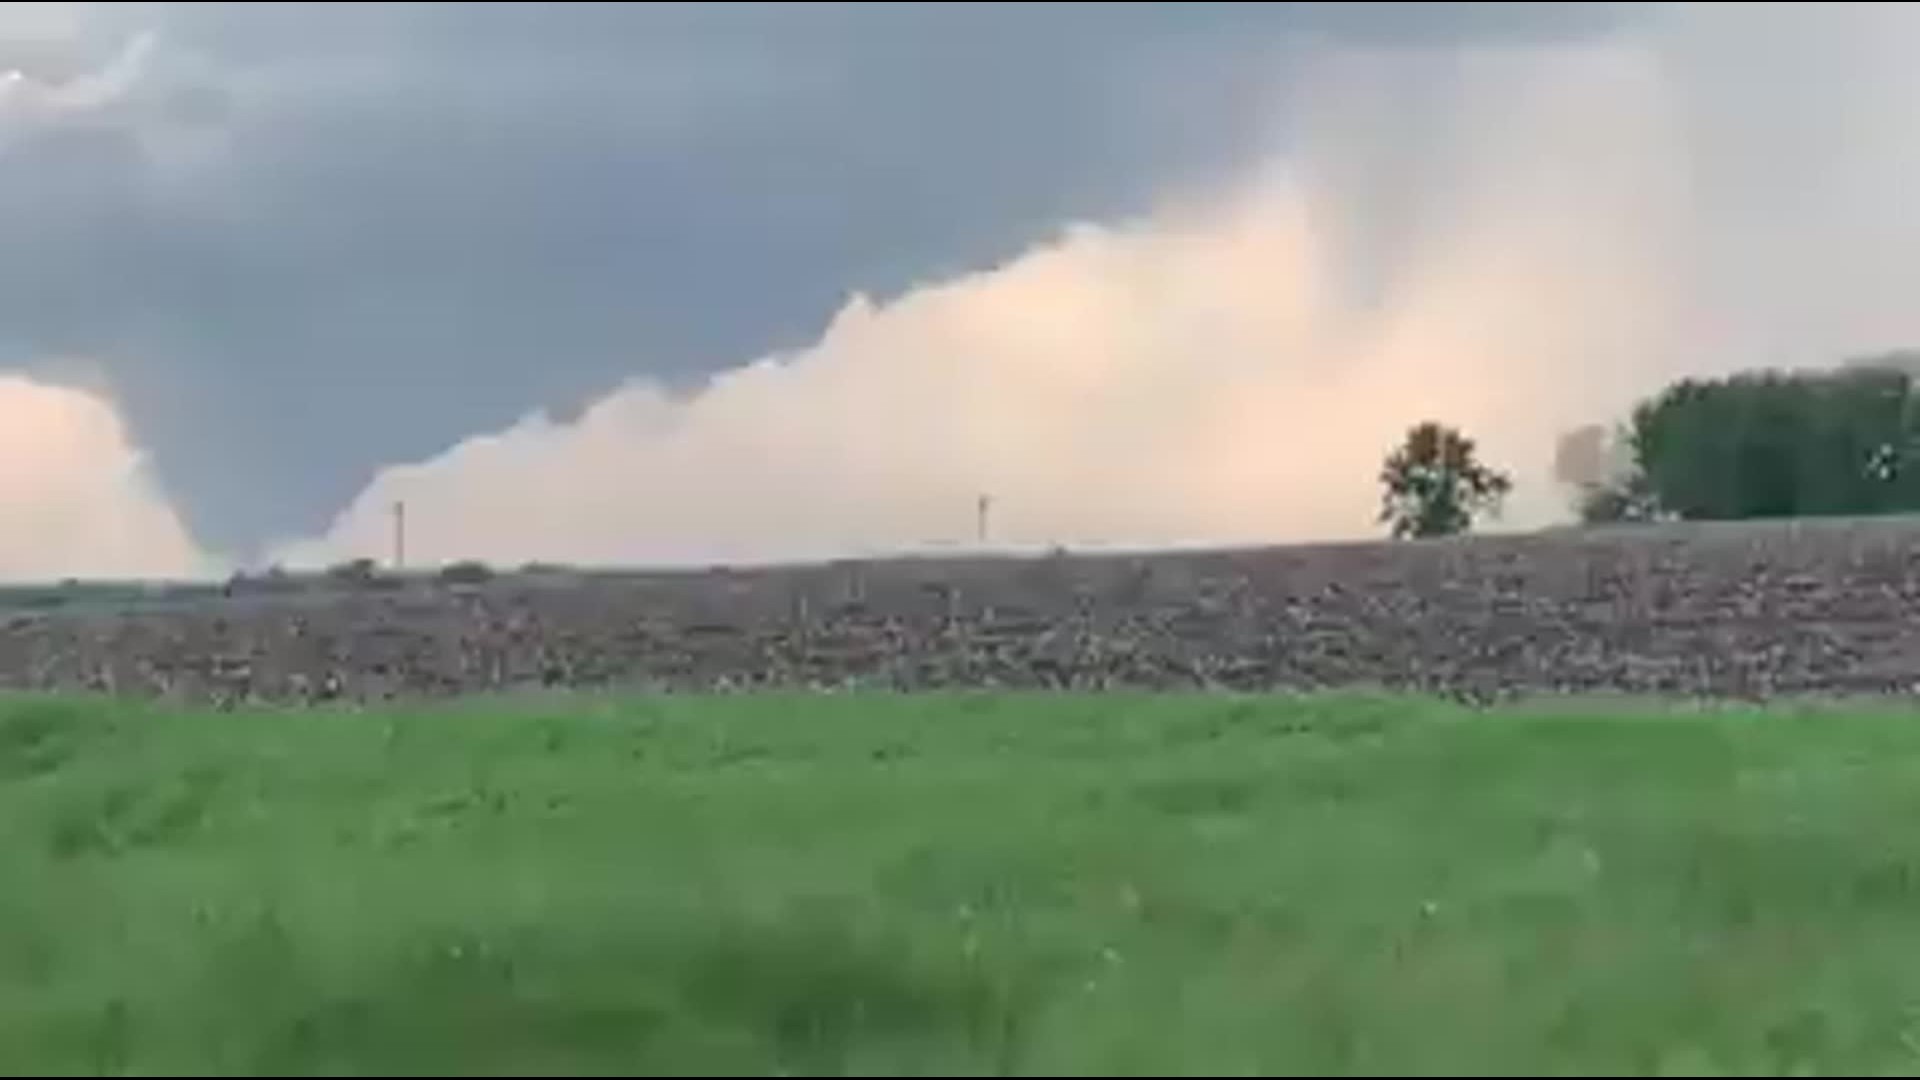 Video shows reported tornado moving through the Iowa City area